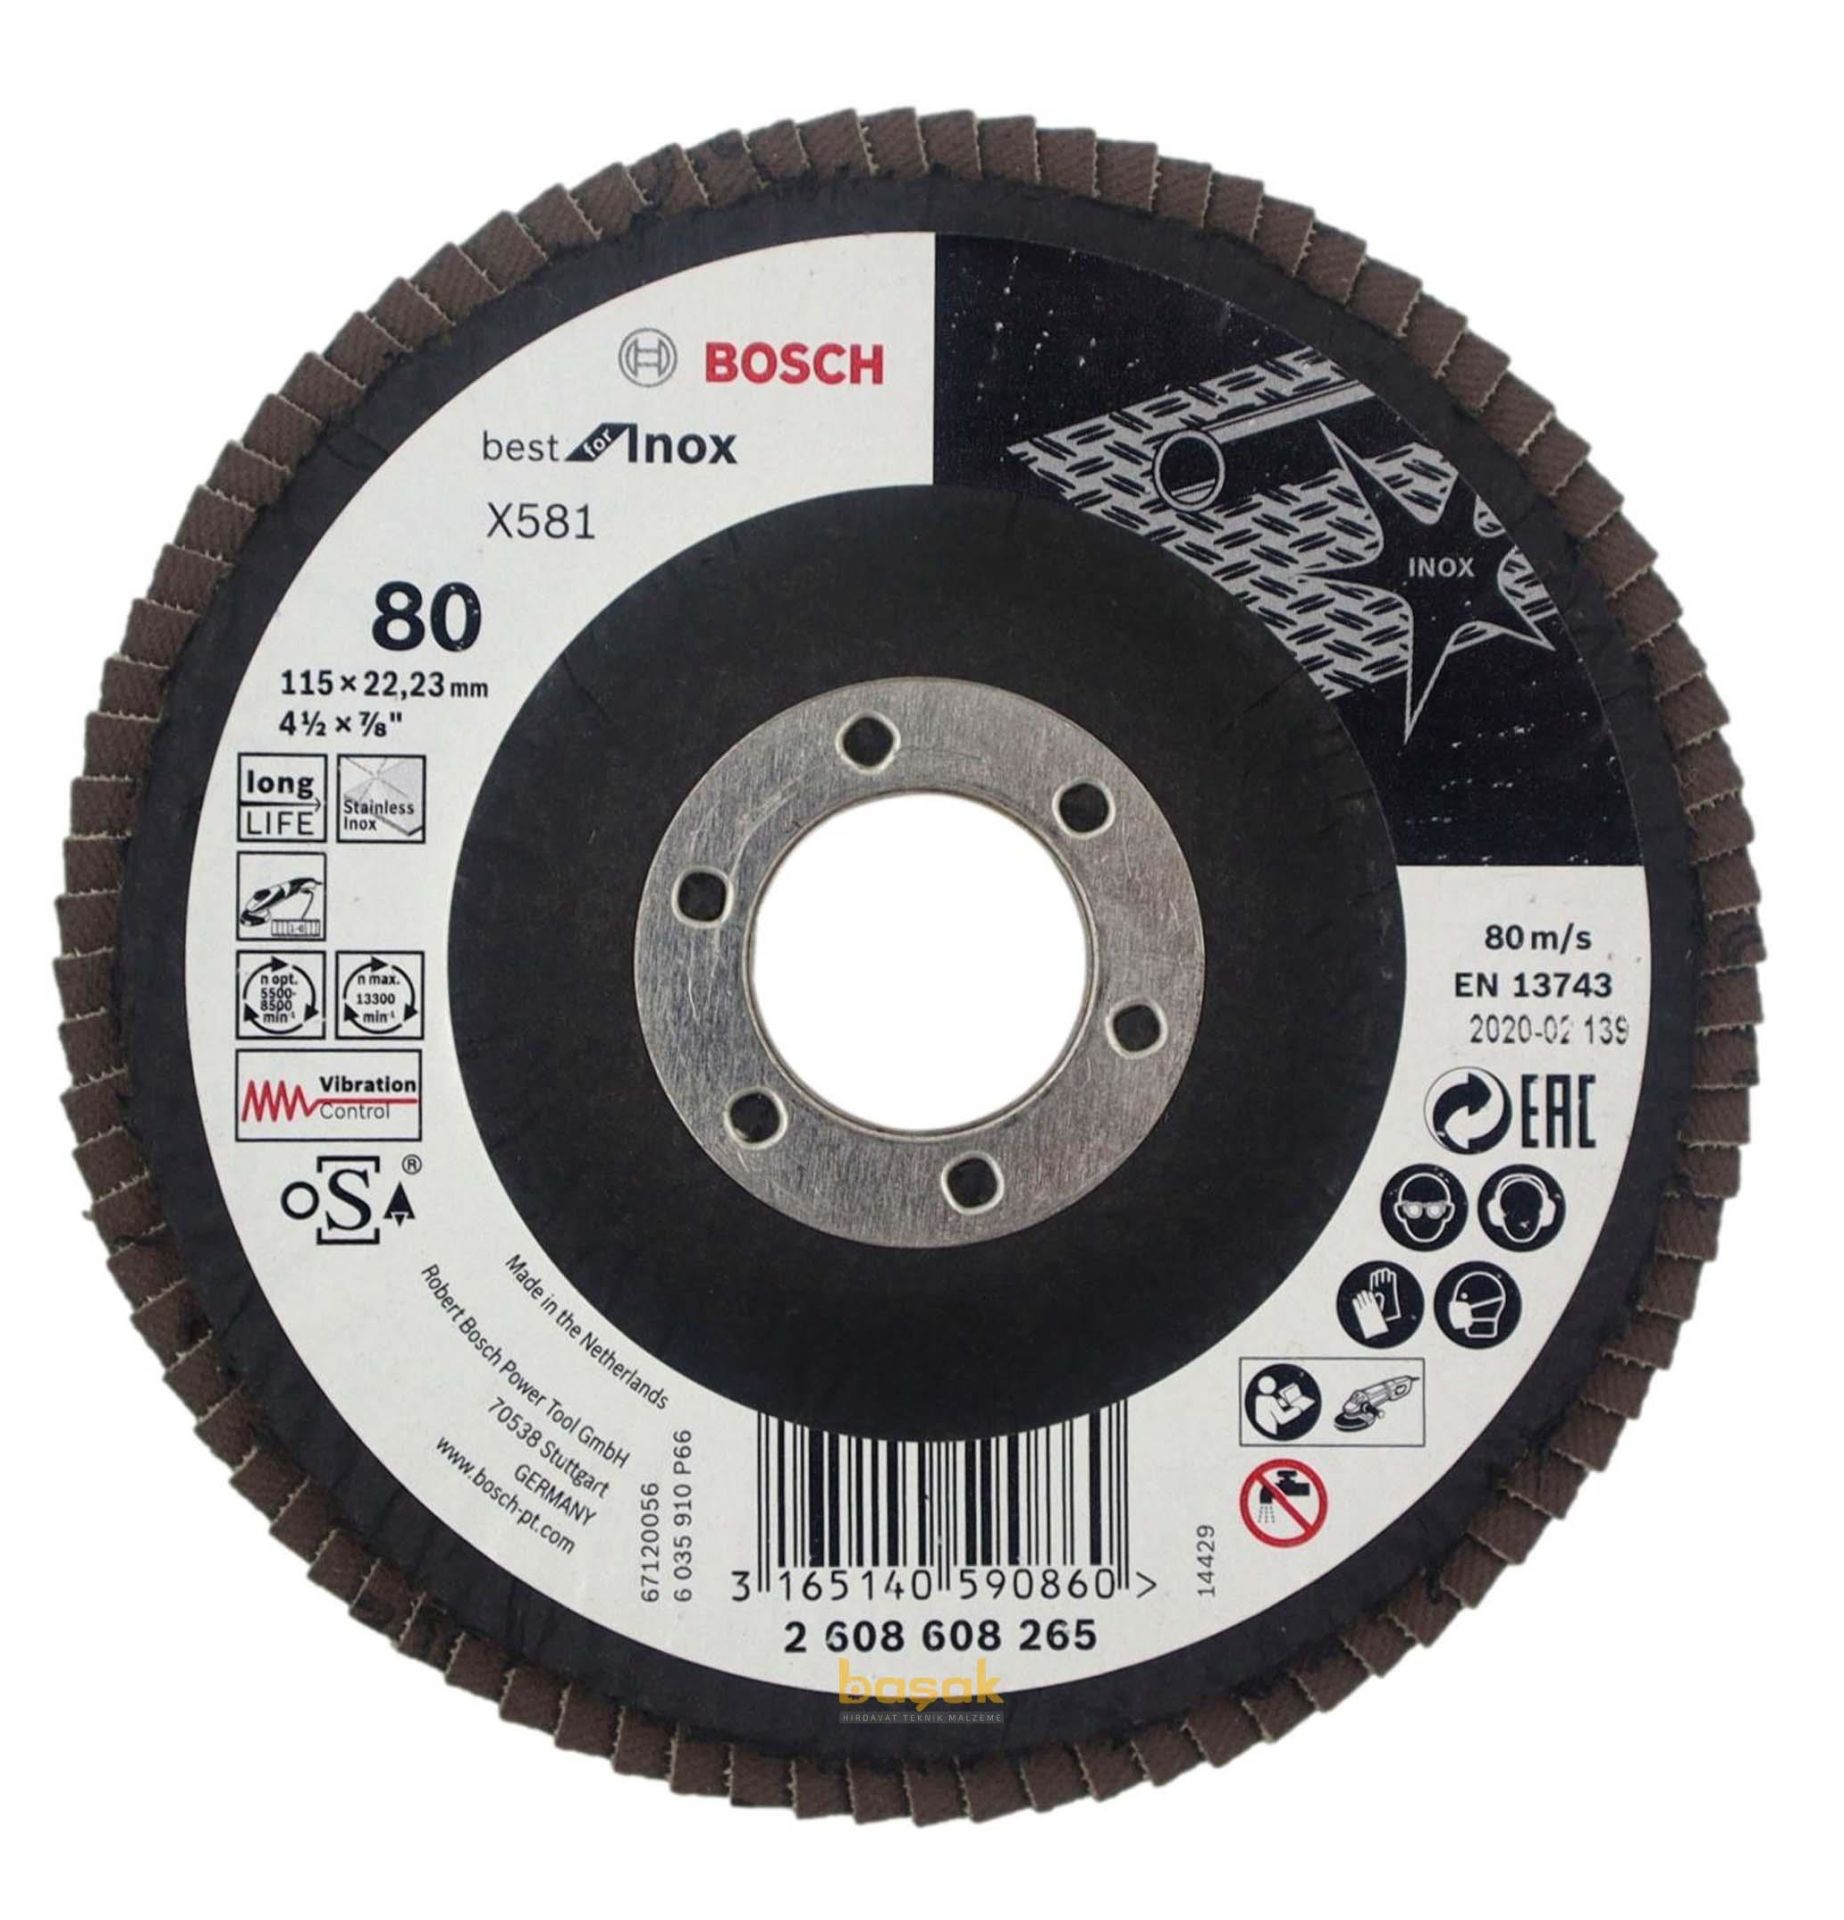 Bosch 115 mm 80 Kum X581Best Inox Flap Disk 2608608265